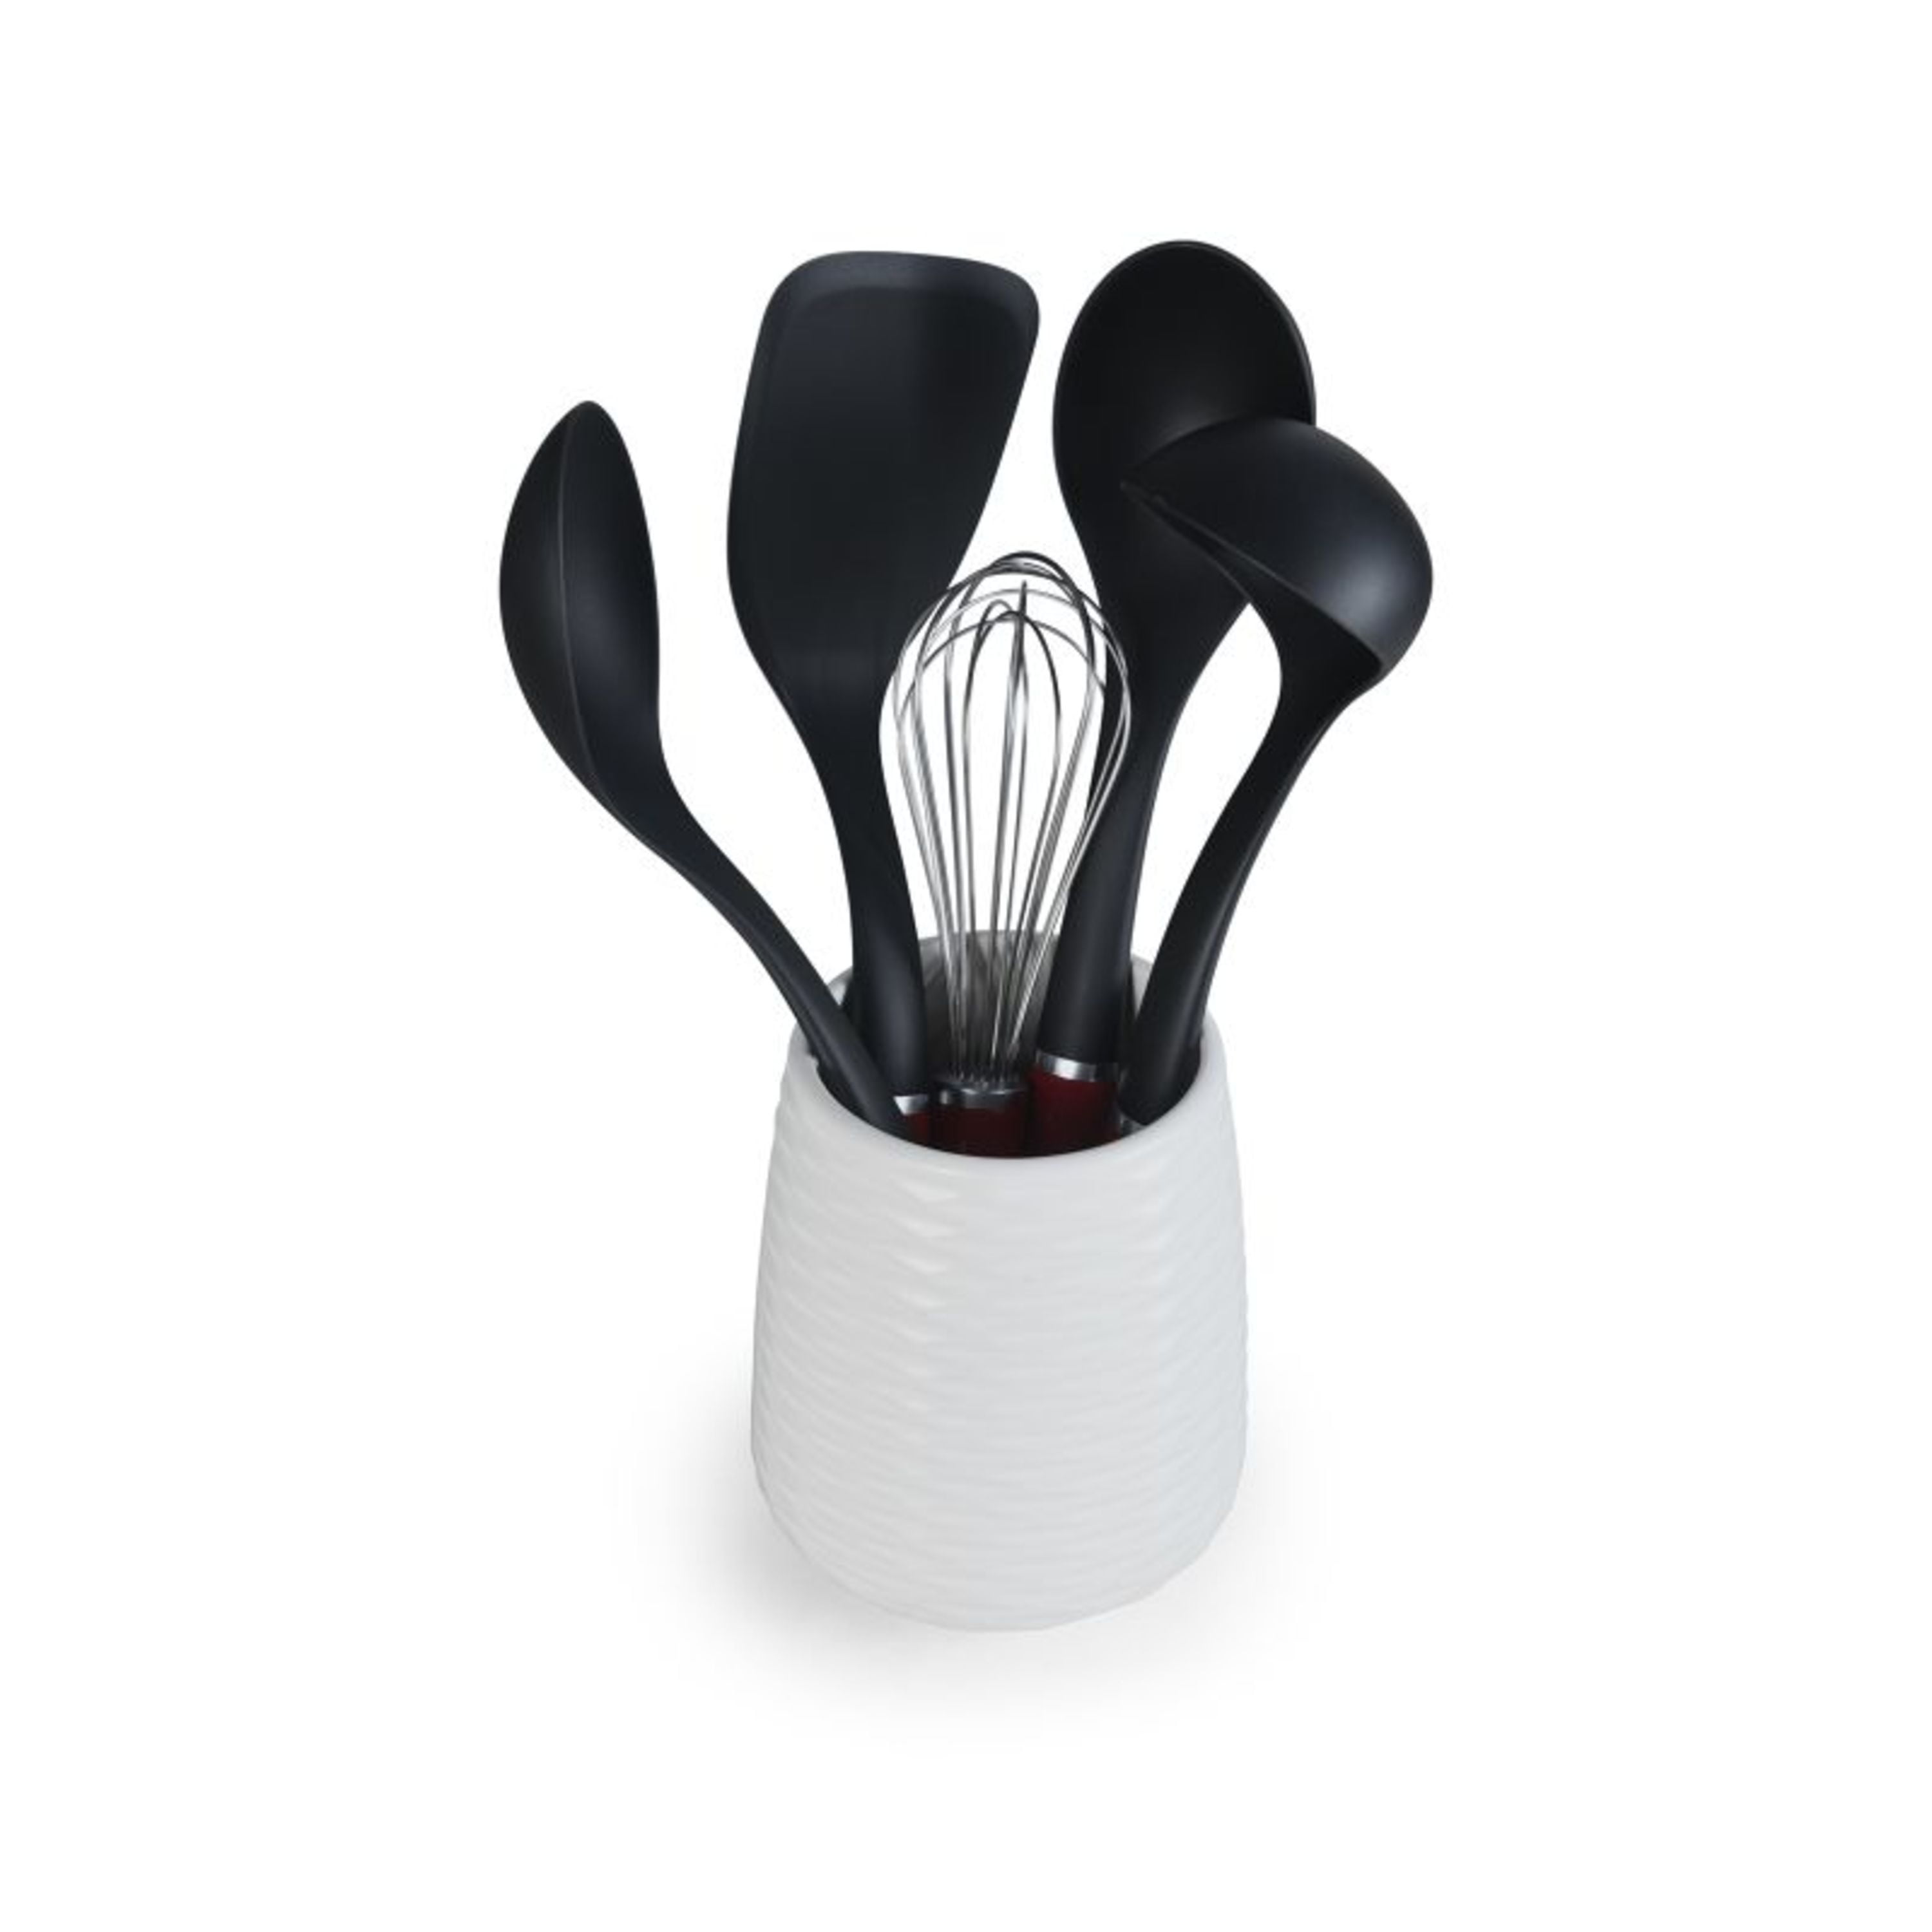 KitchenAid Tool and Gadget Set with Crock, 6-Piece, Black